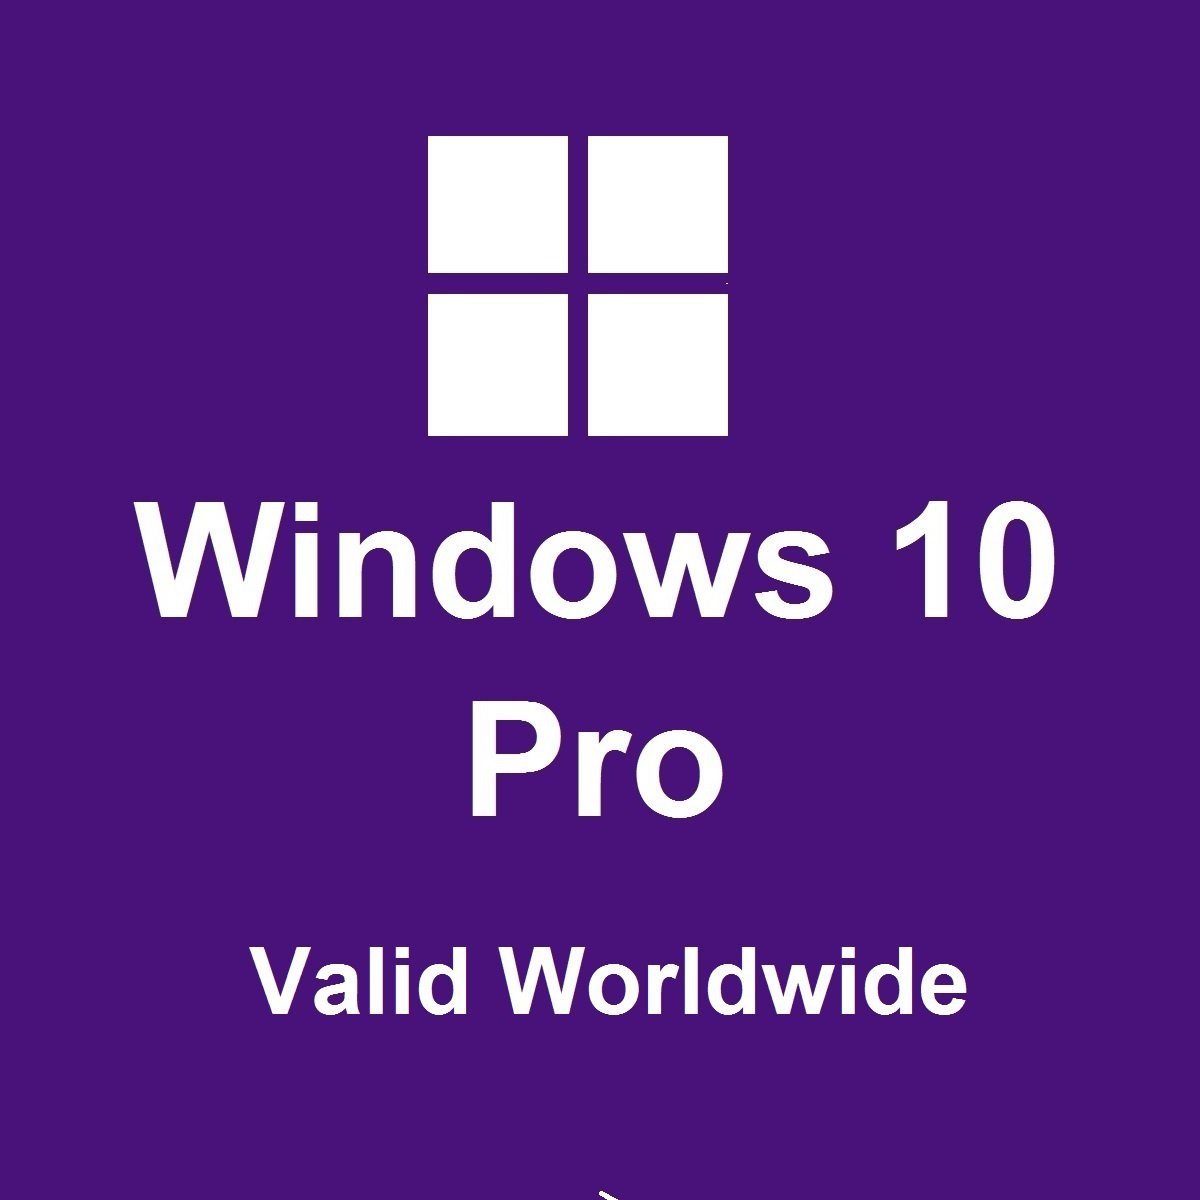 windows 10 pro professional cd key 32 64 bit